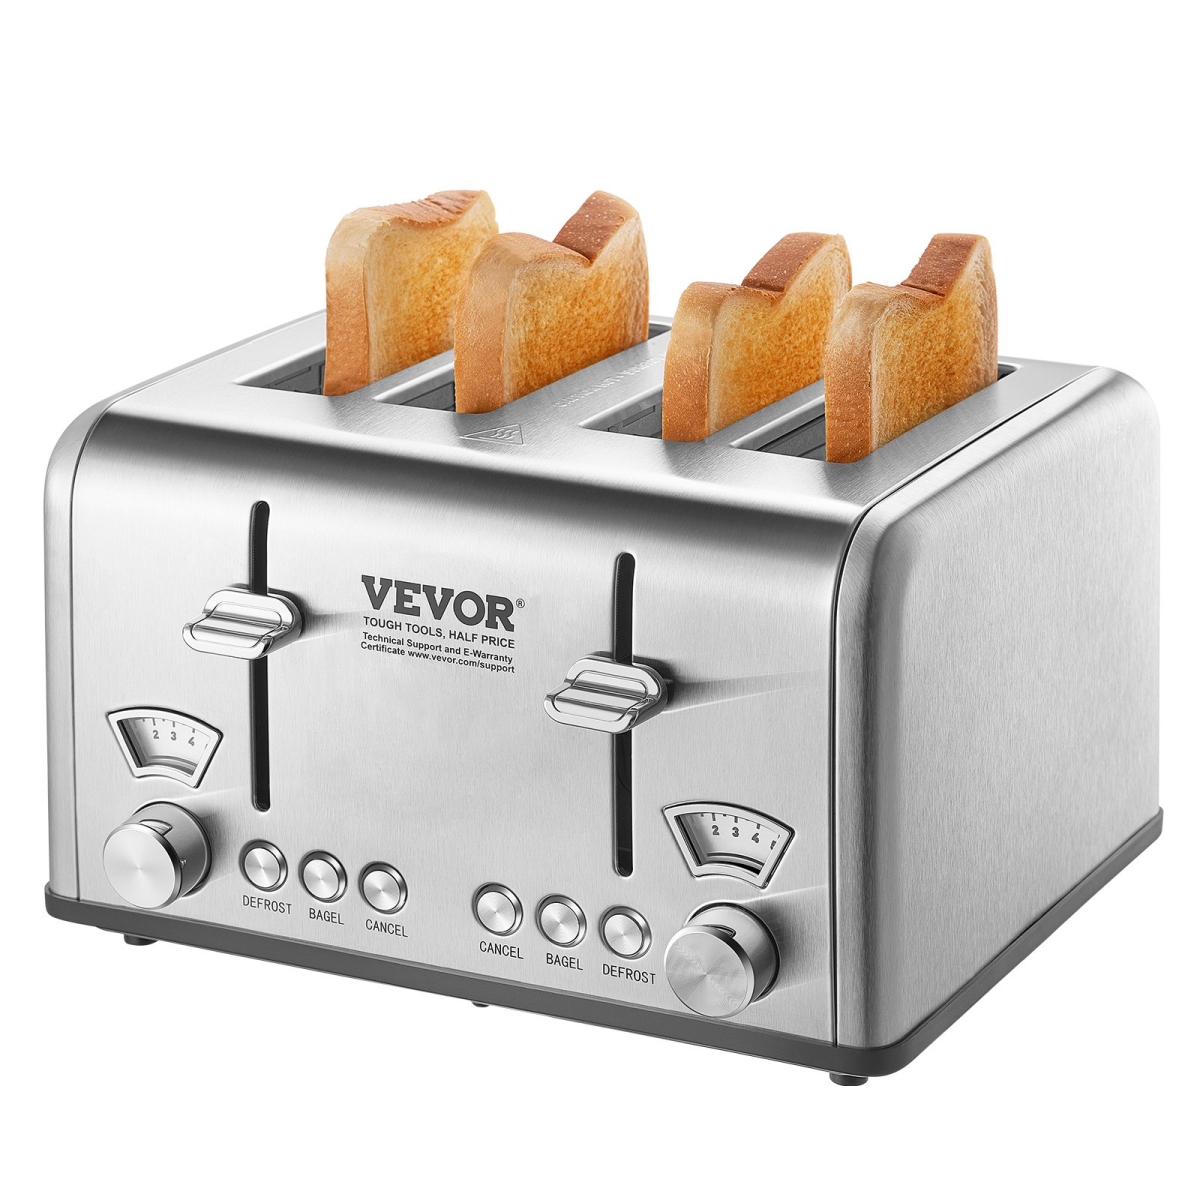 Picture of Vevor JYDSLFGKDCK4NJQ4VV1 4 Slice Retro Stainless Steel Toaster